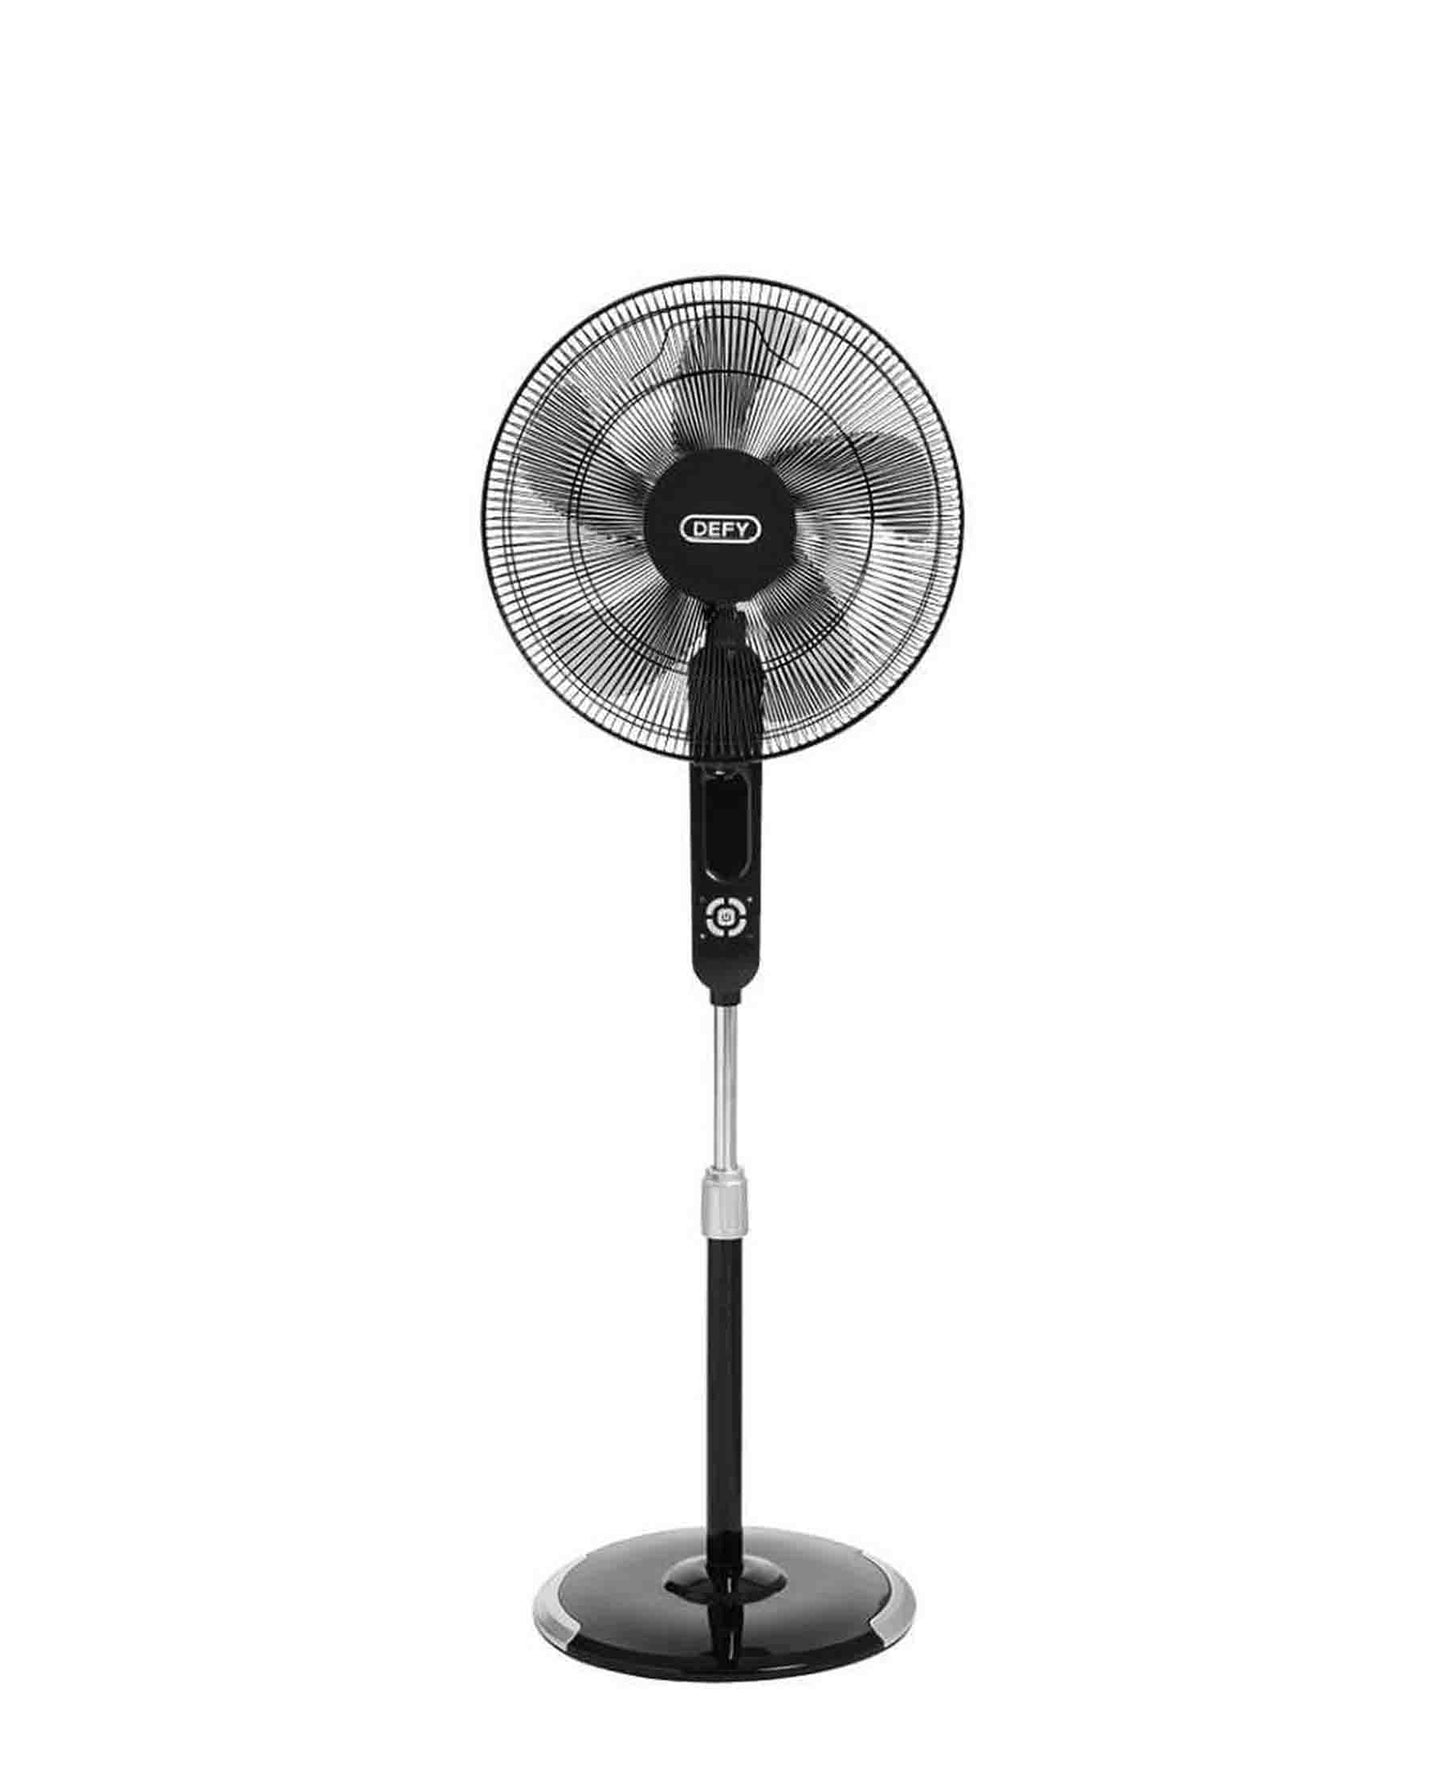 Defy Pedestal Fan with Remote Control - Black